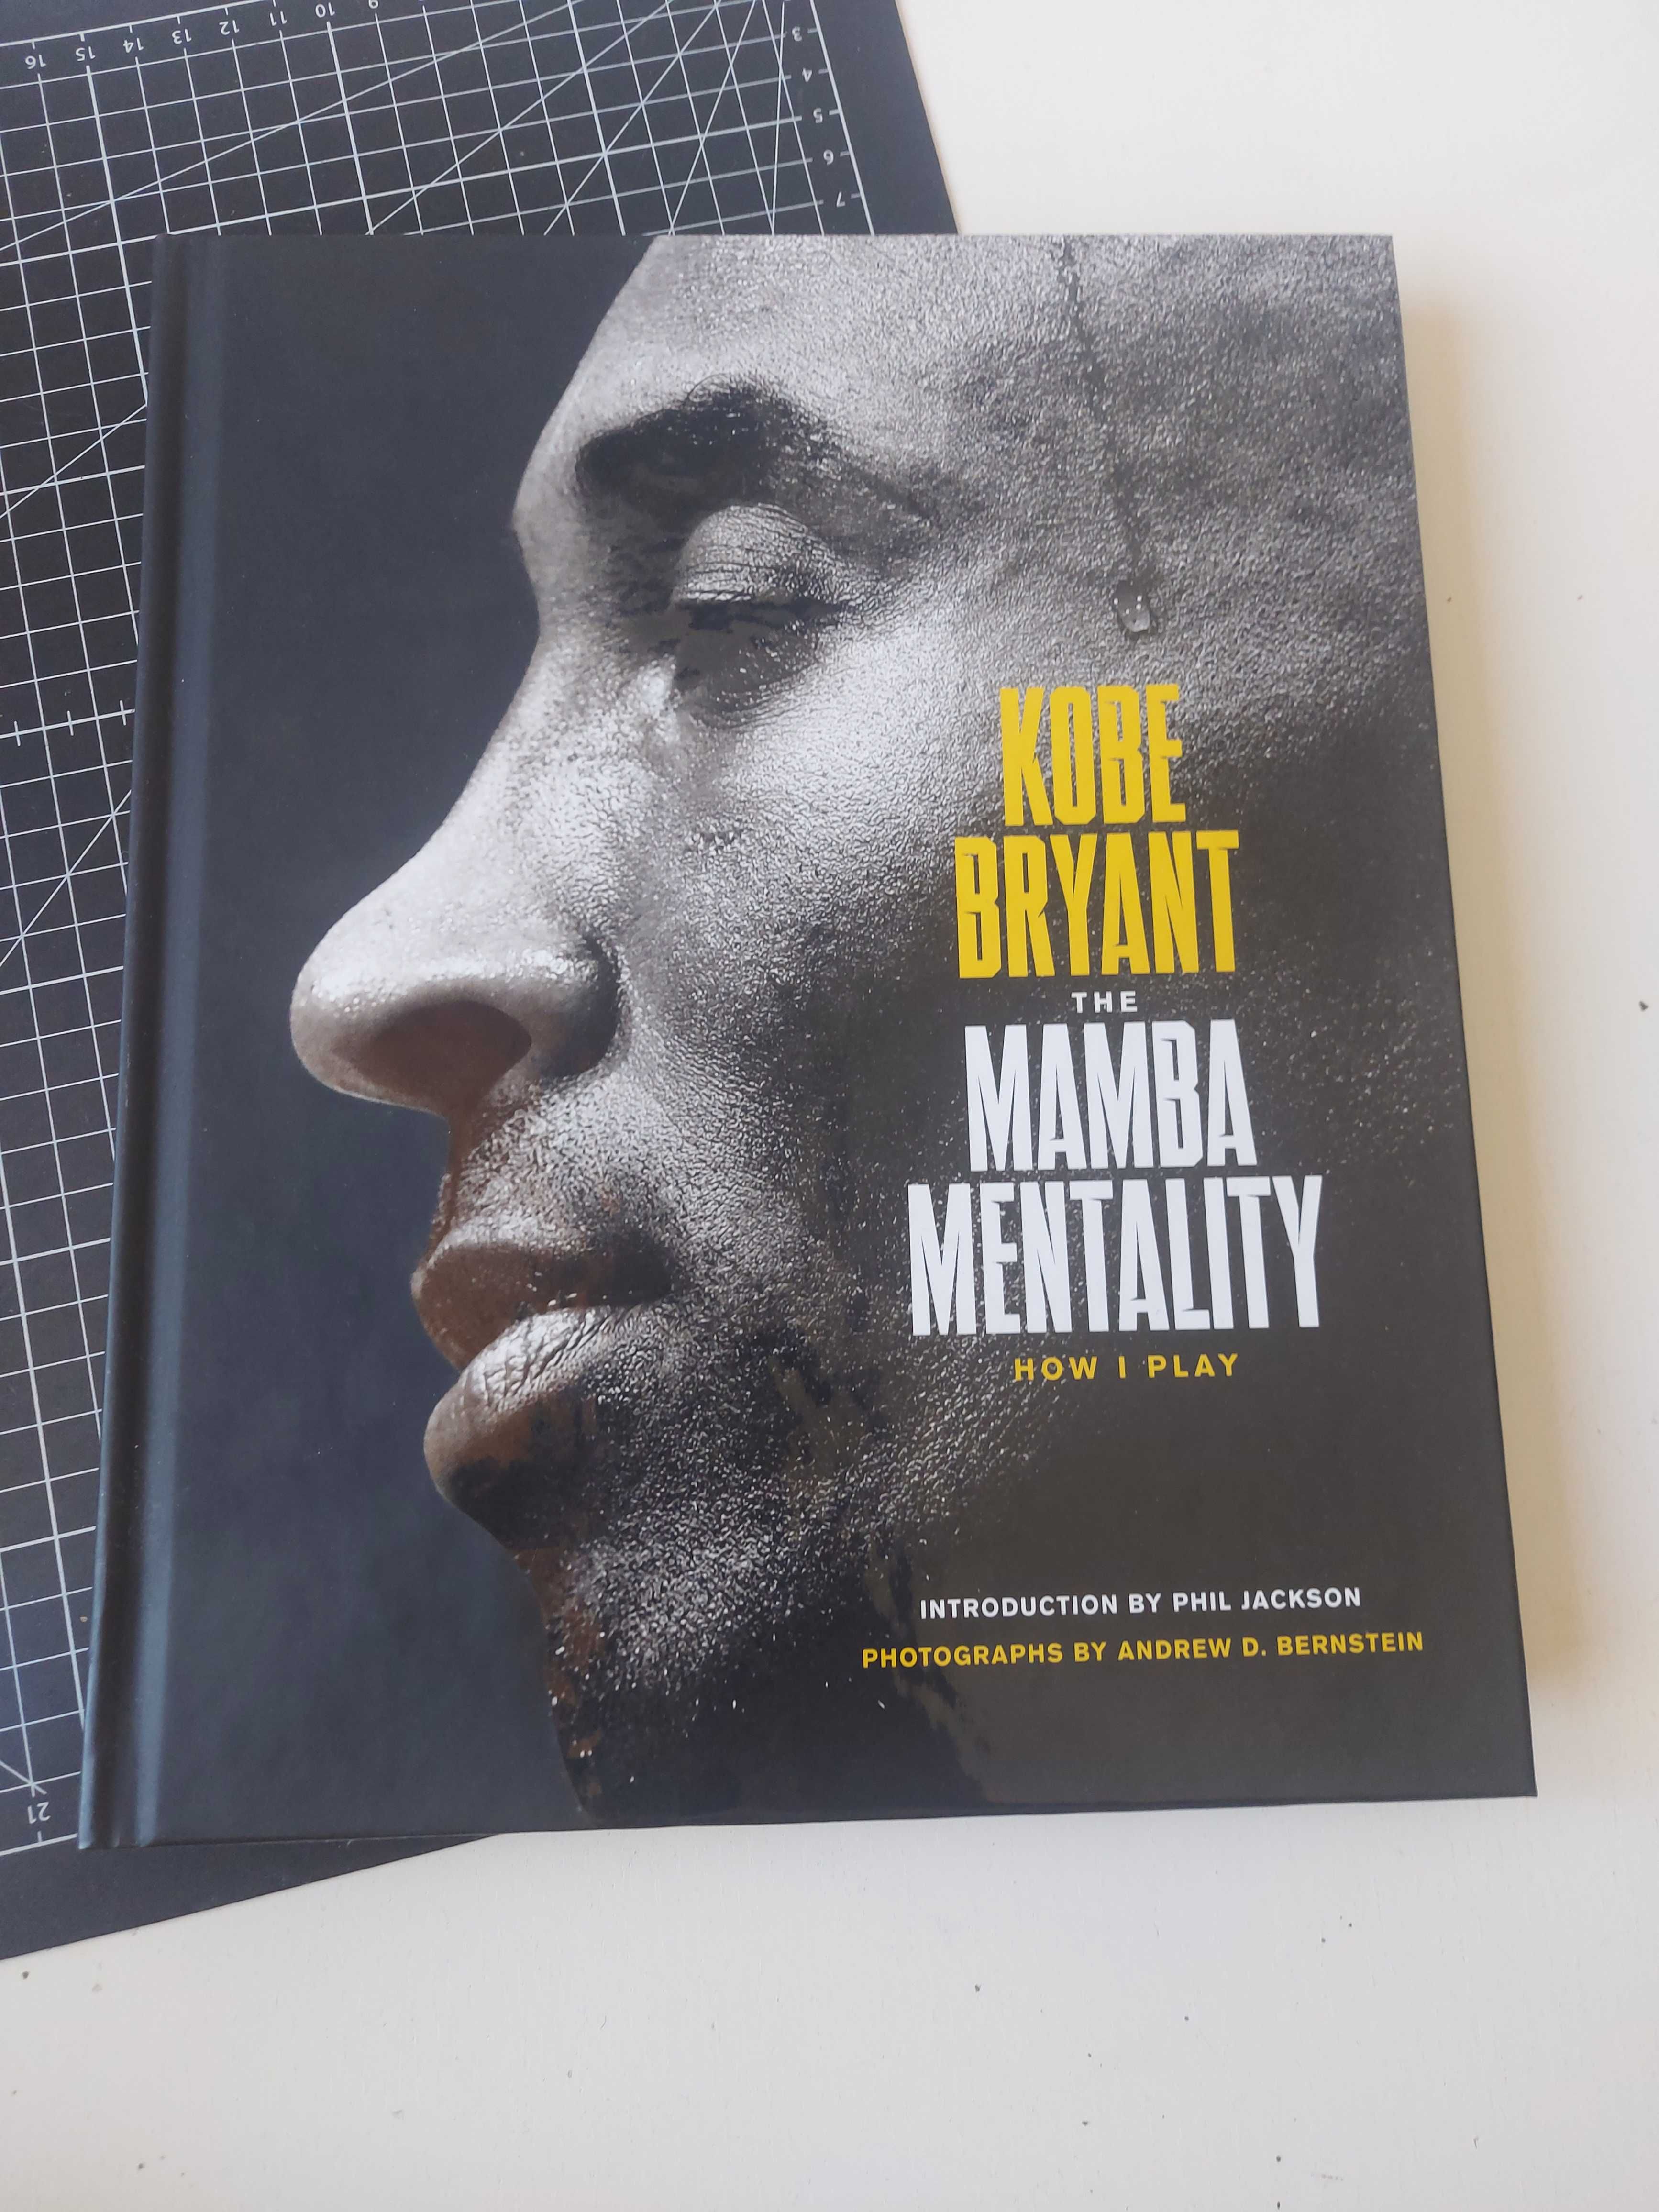 Kobe Bryant the Mamba mentality